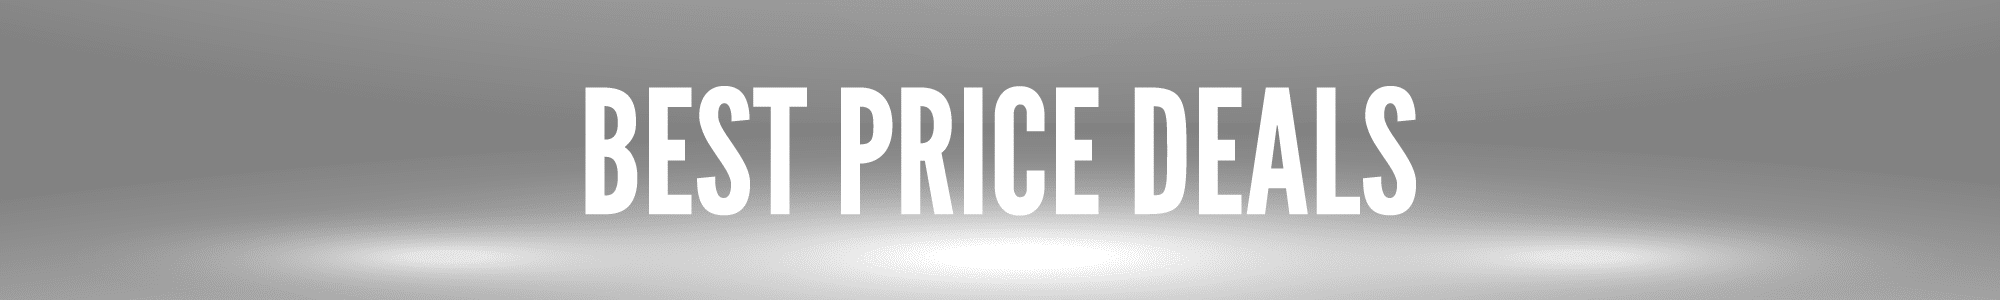 Best Price banner image